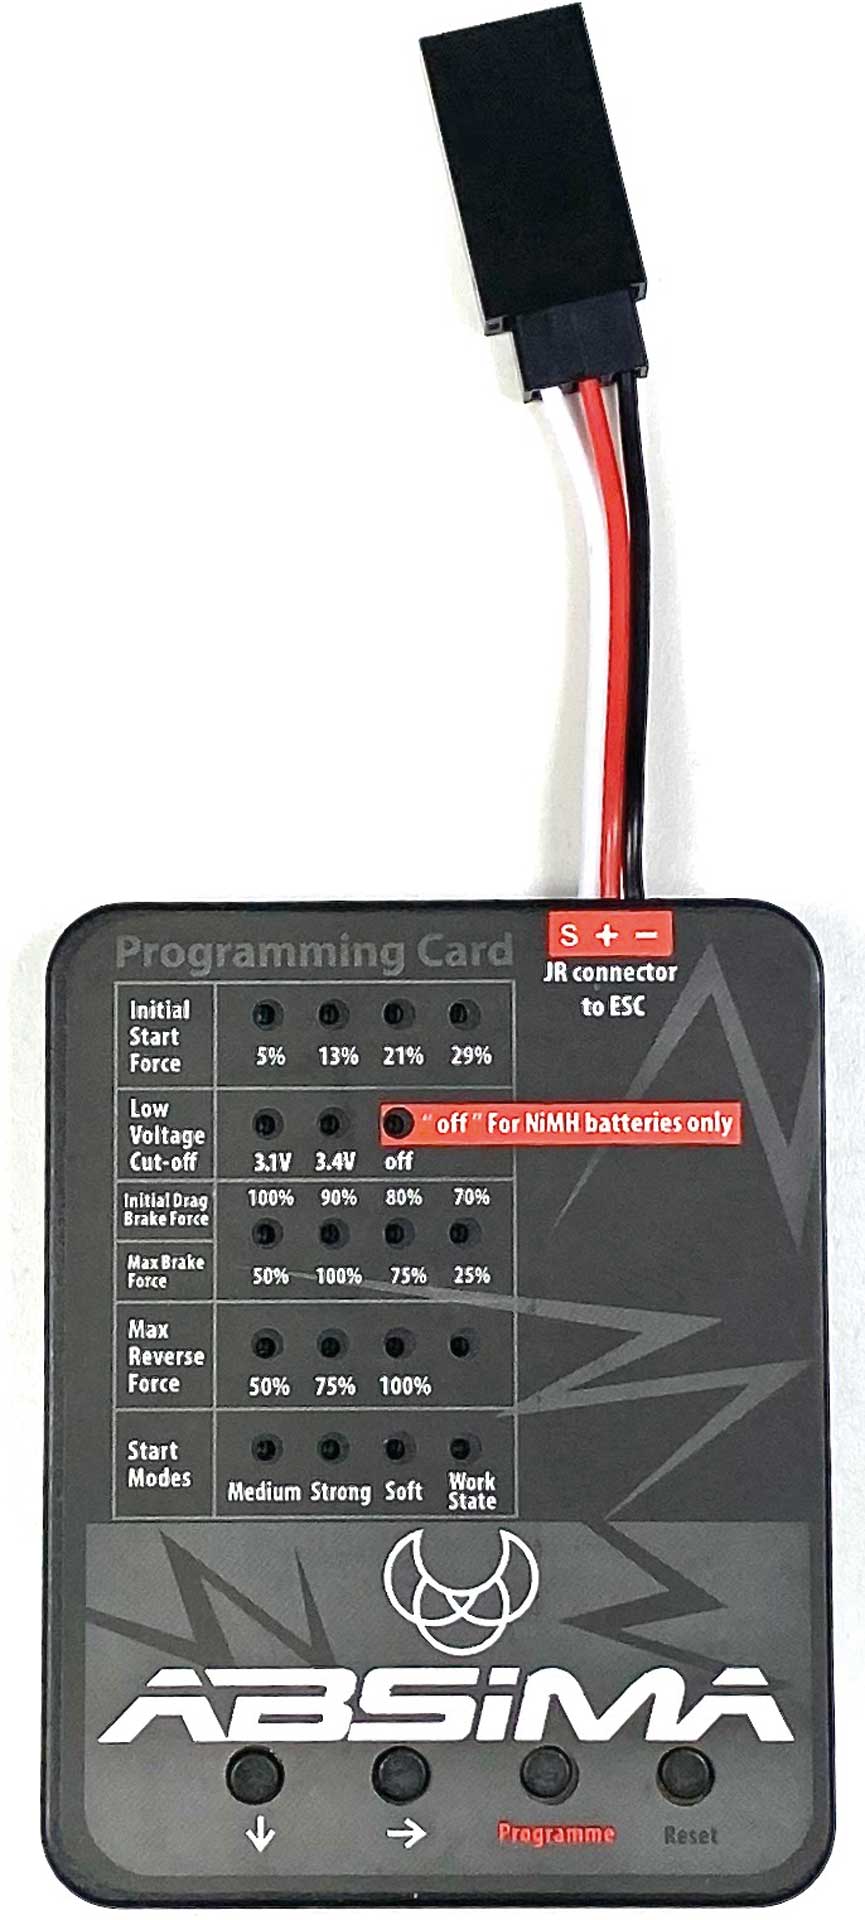 ABSIMA Programming card for V2 brushed controller